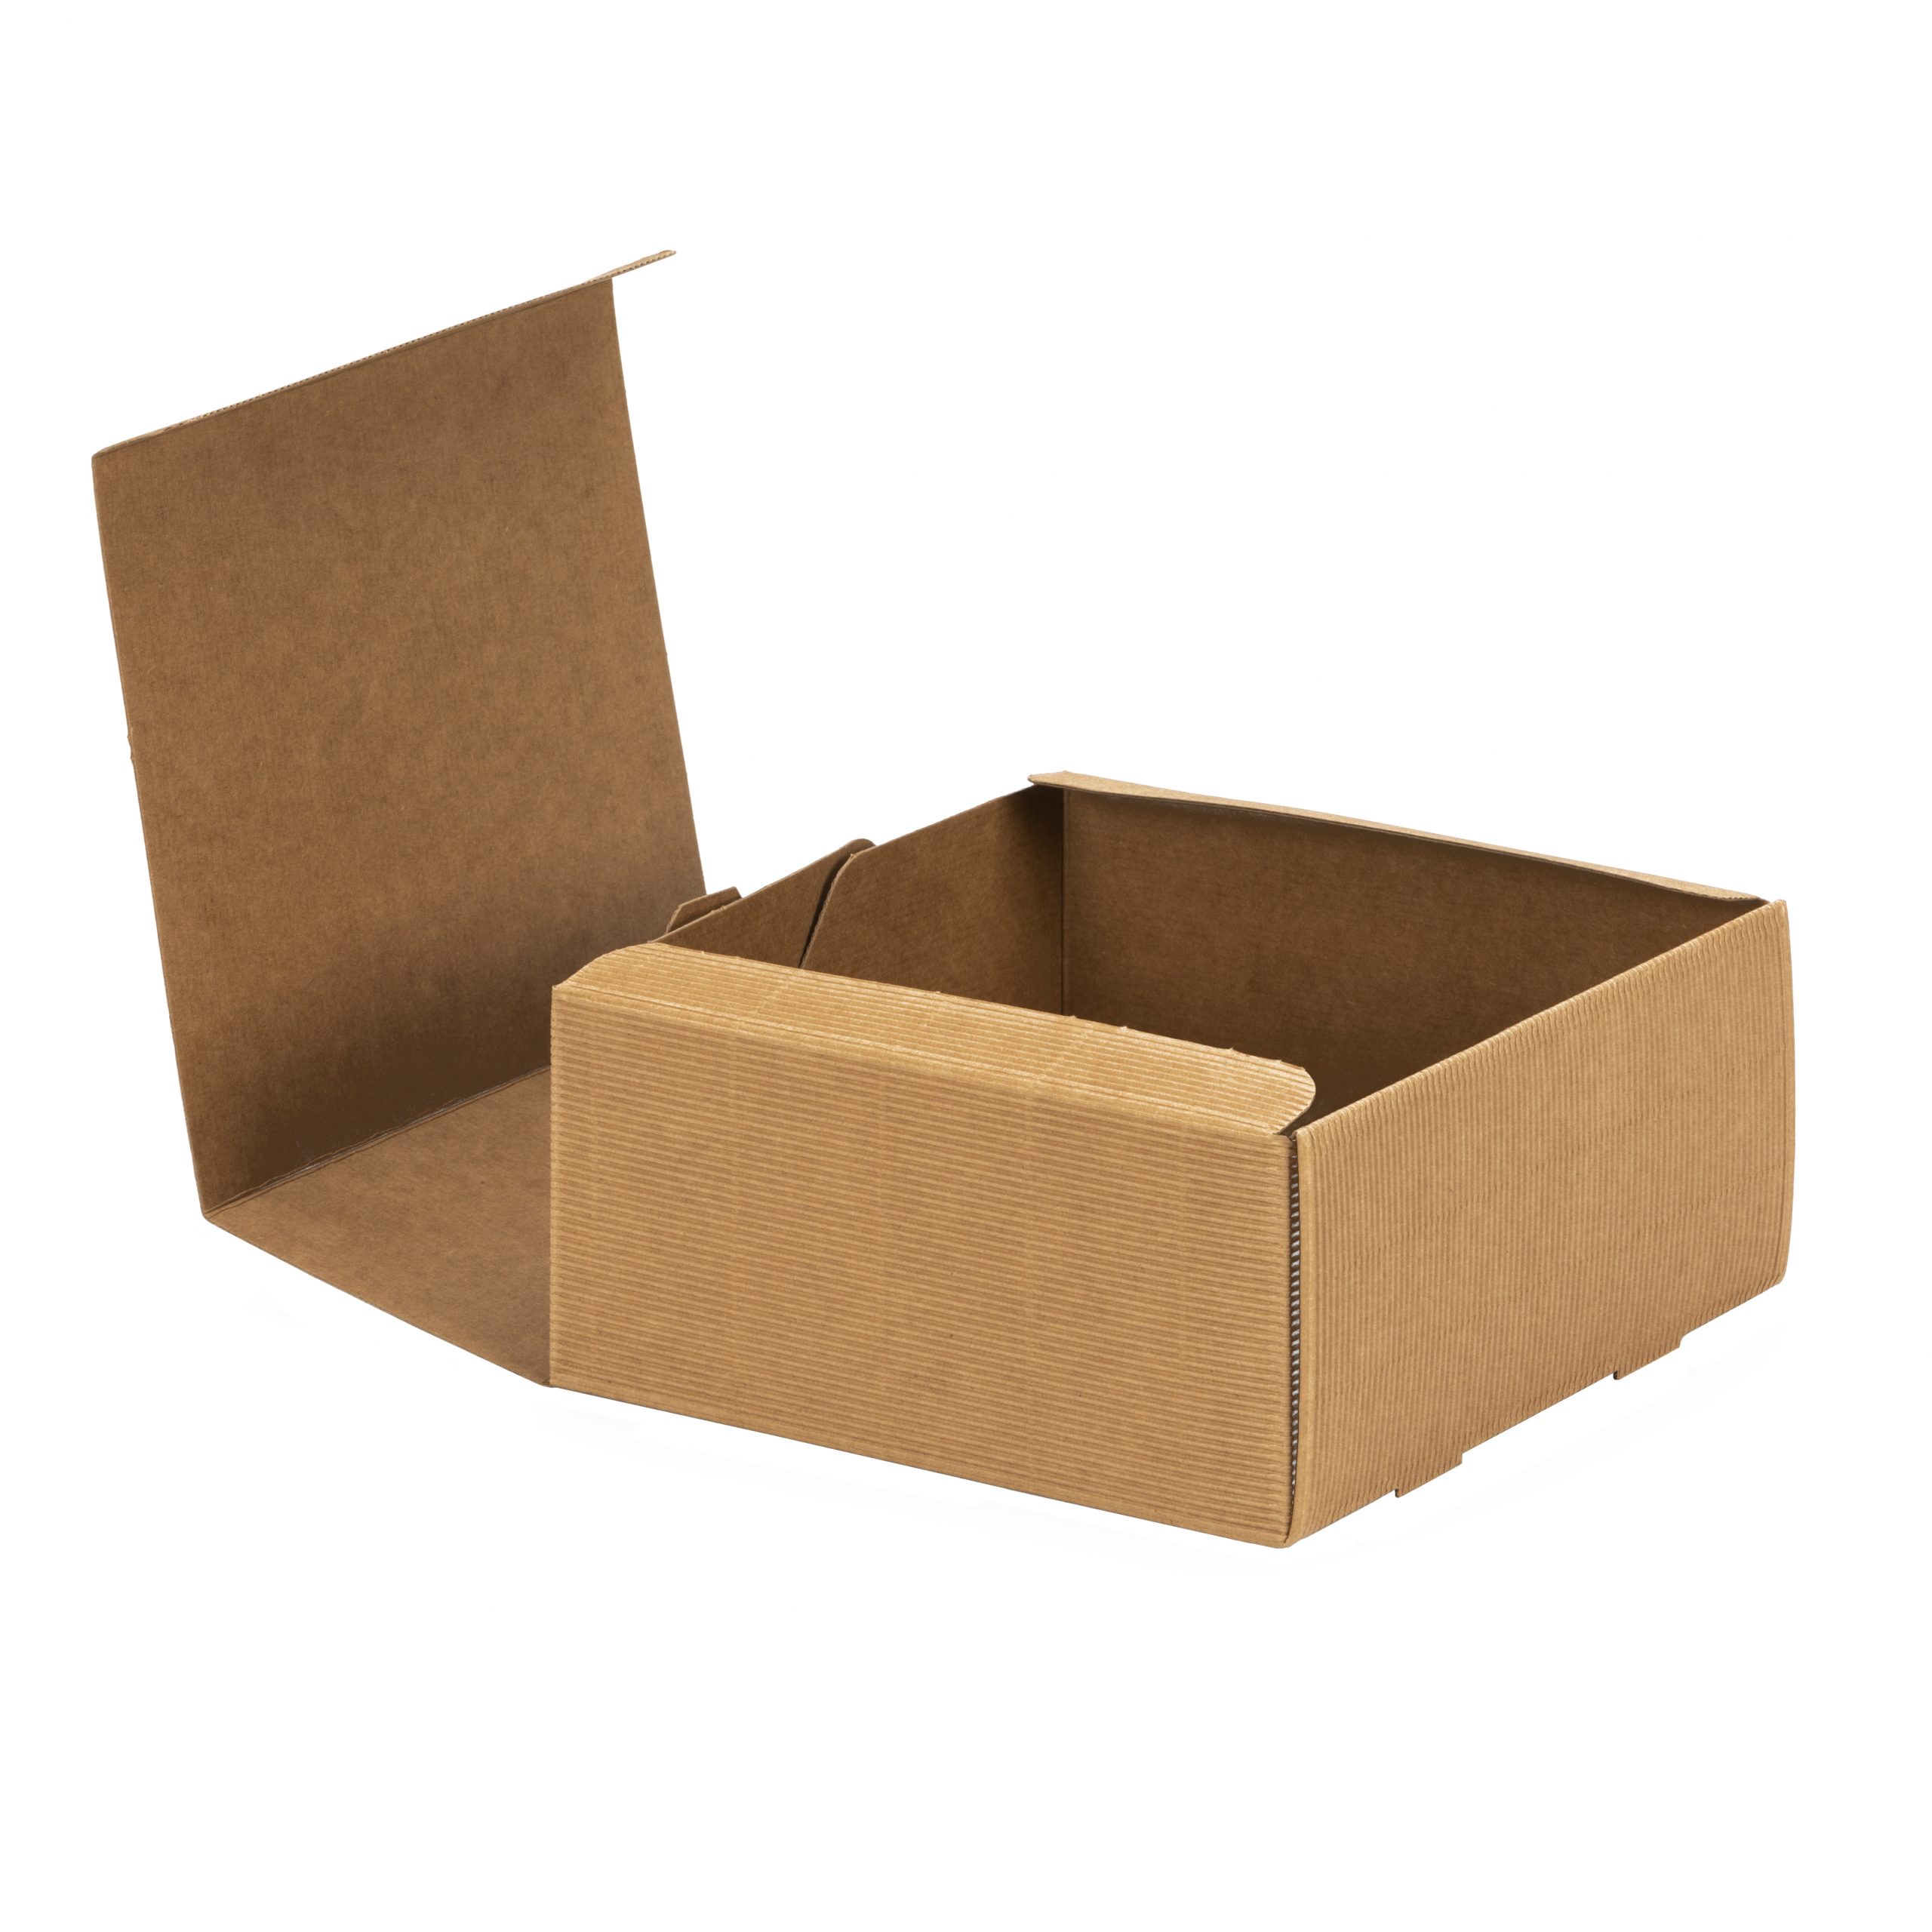 Square Gift Box – 200x200x100mm